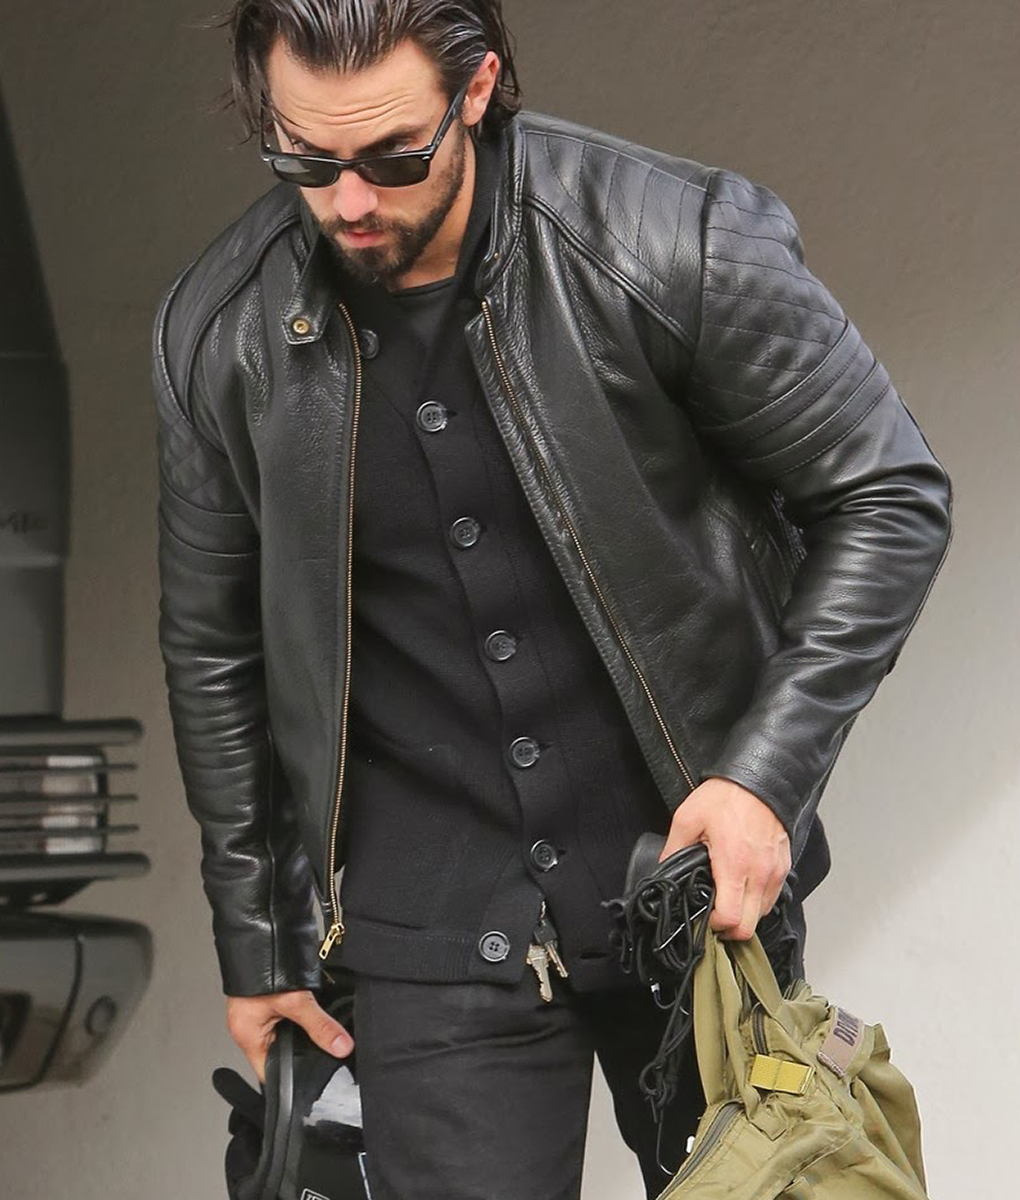 Milo Ventimiglia The Company You Keep Leather Jacket